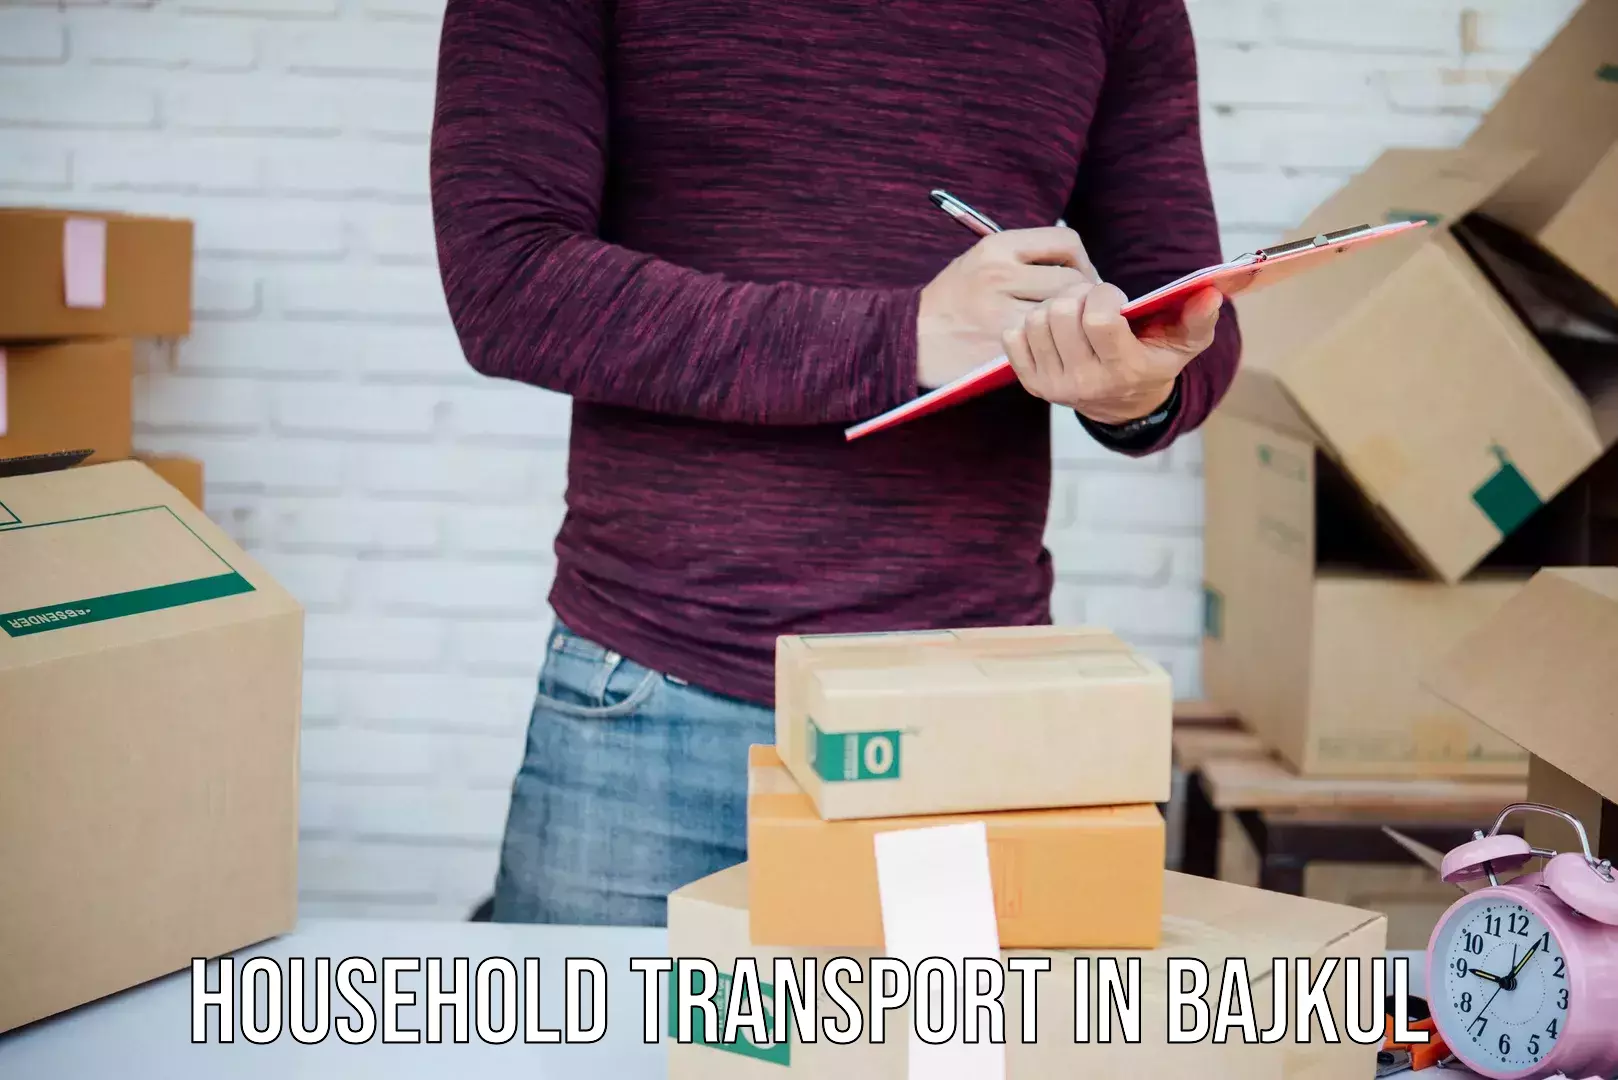 Furniture transport service in Bajkul